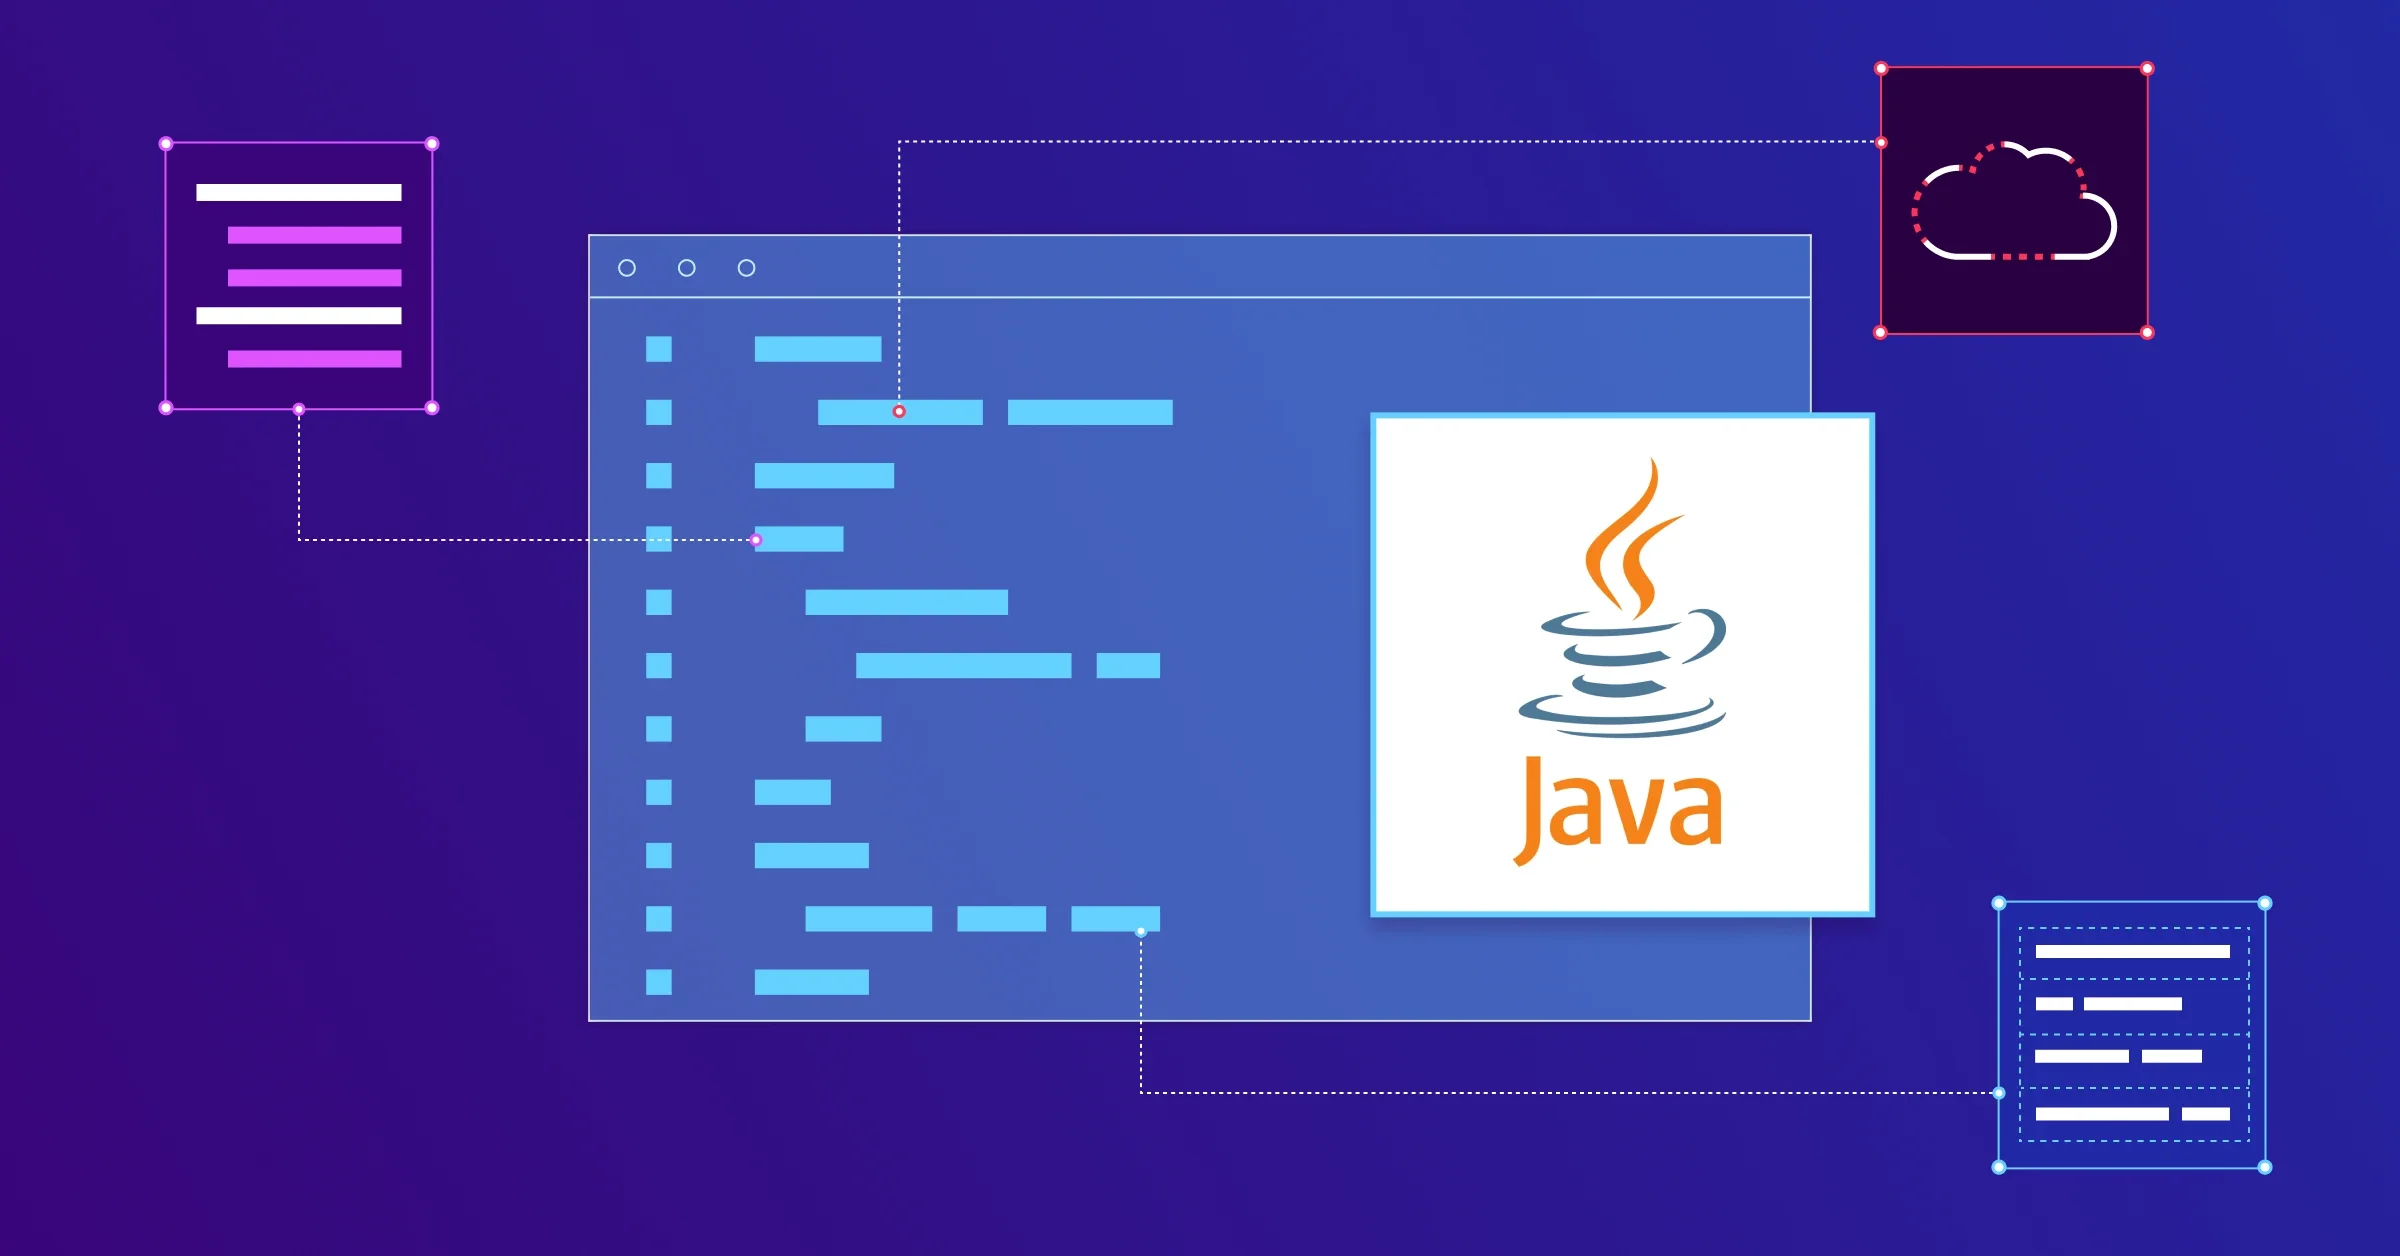 Java JDK 21 LTS features